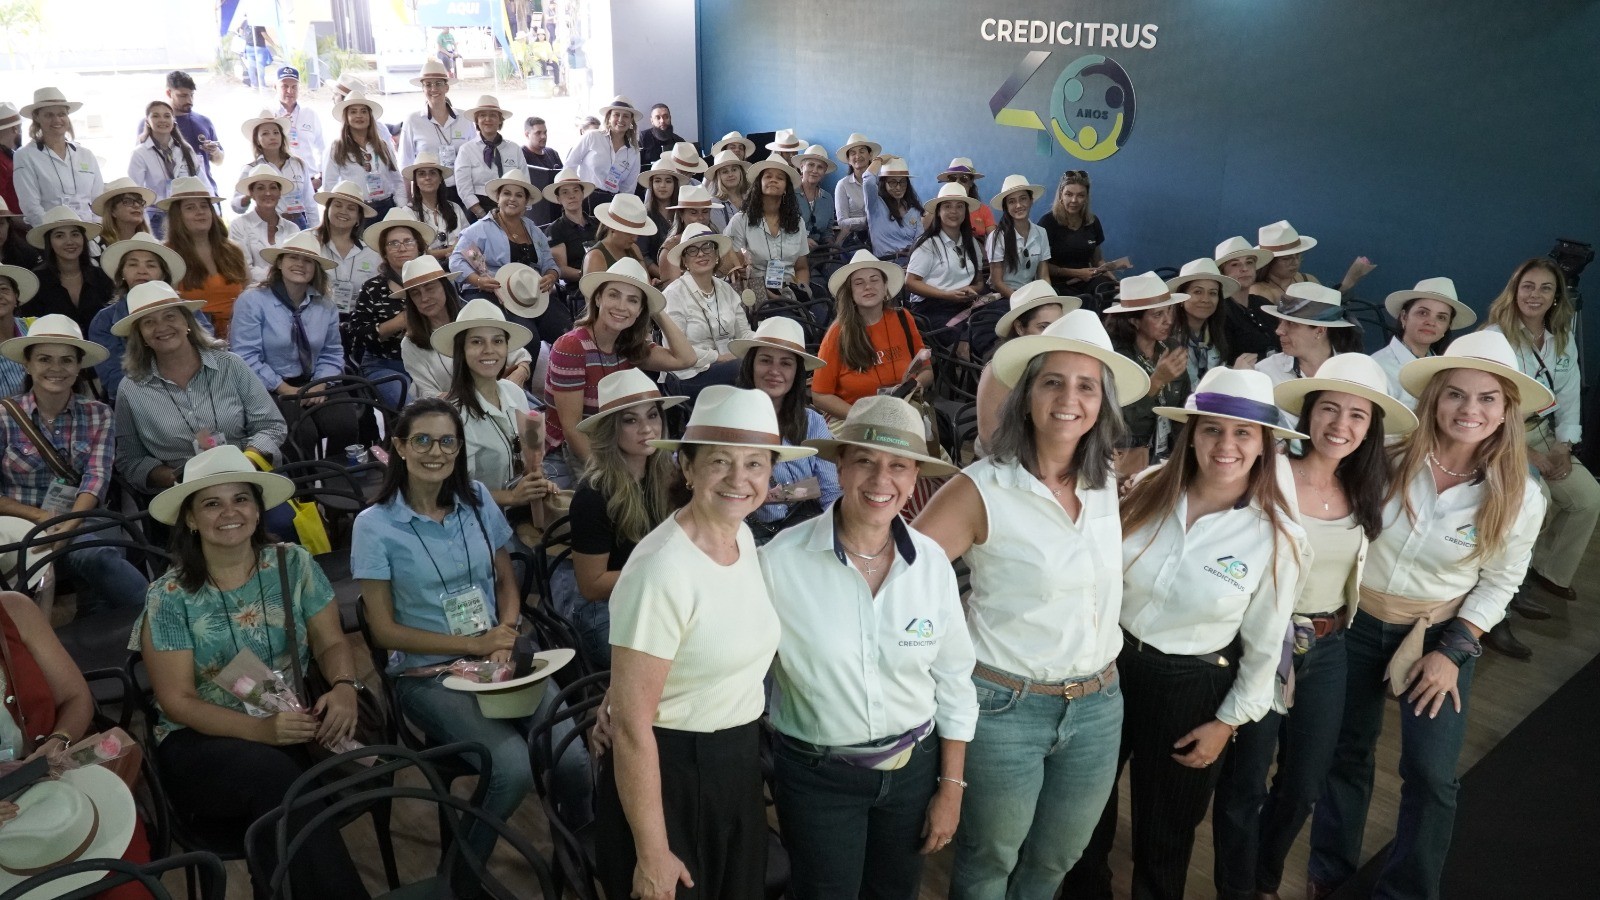 Mulheres do agro: Credicitrus promoveu evento exclusivo para elas durante a Agrishow